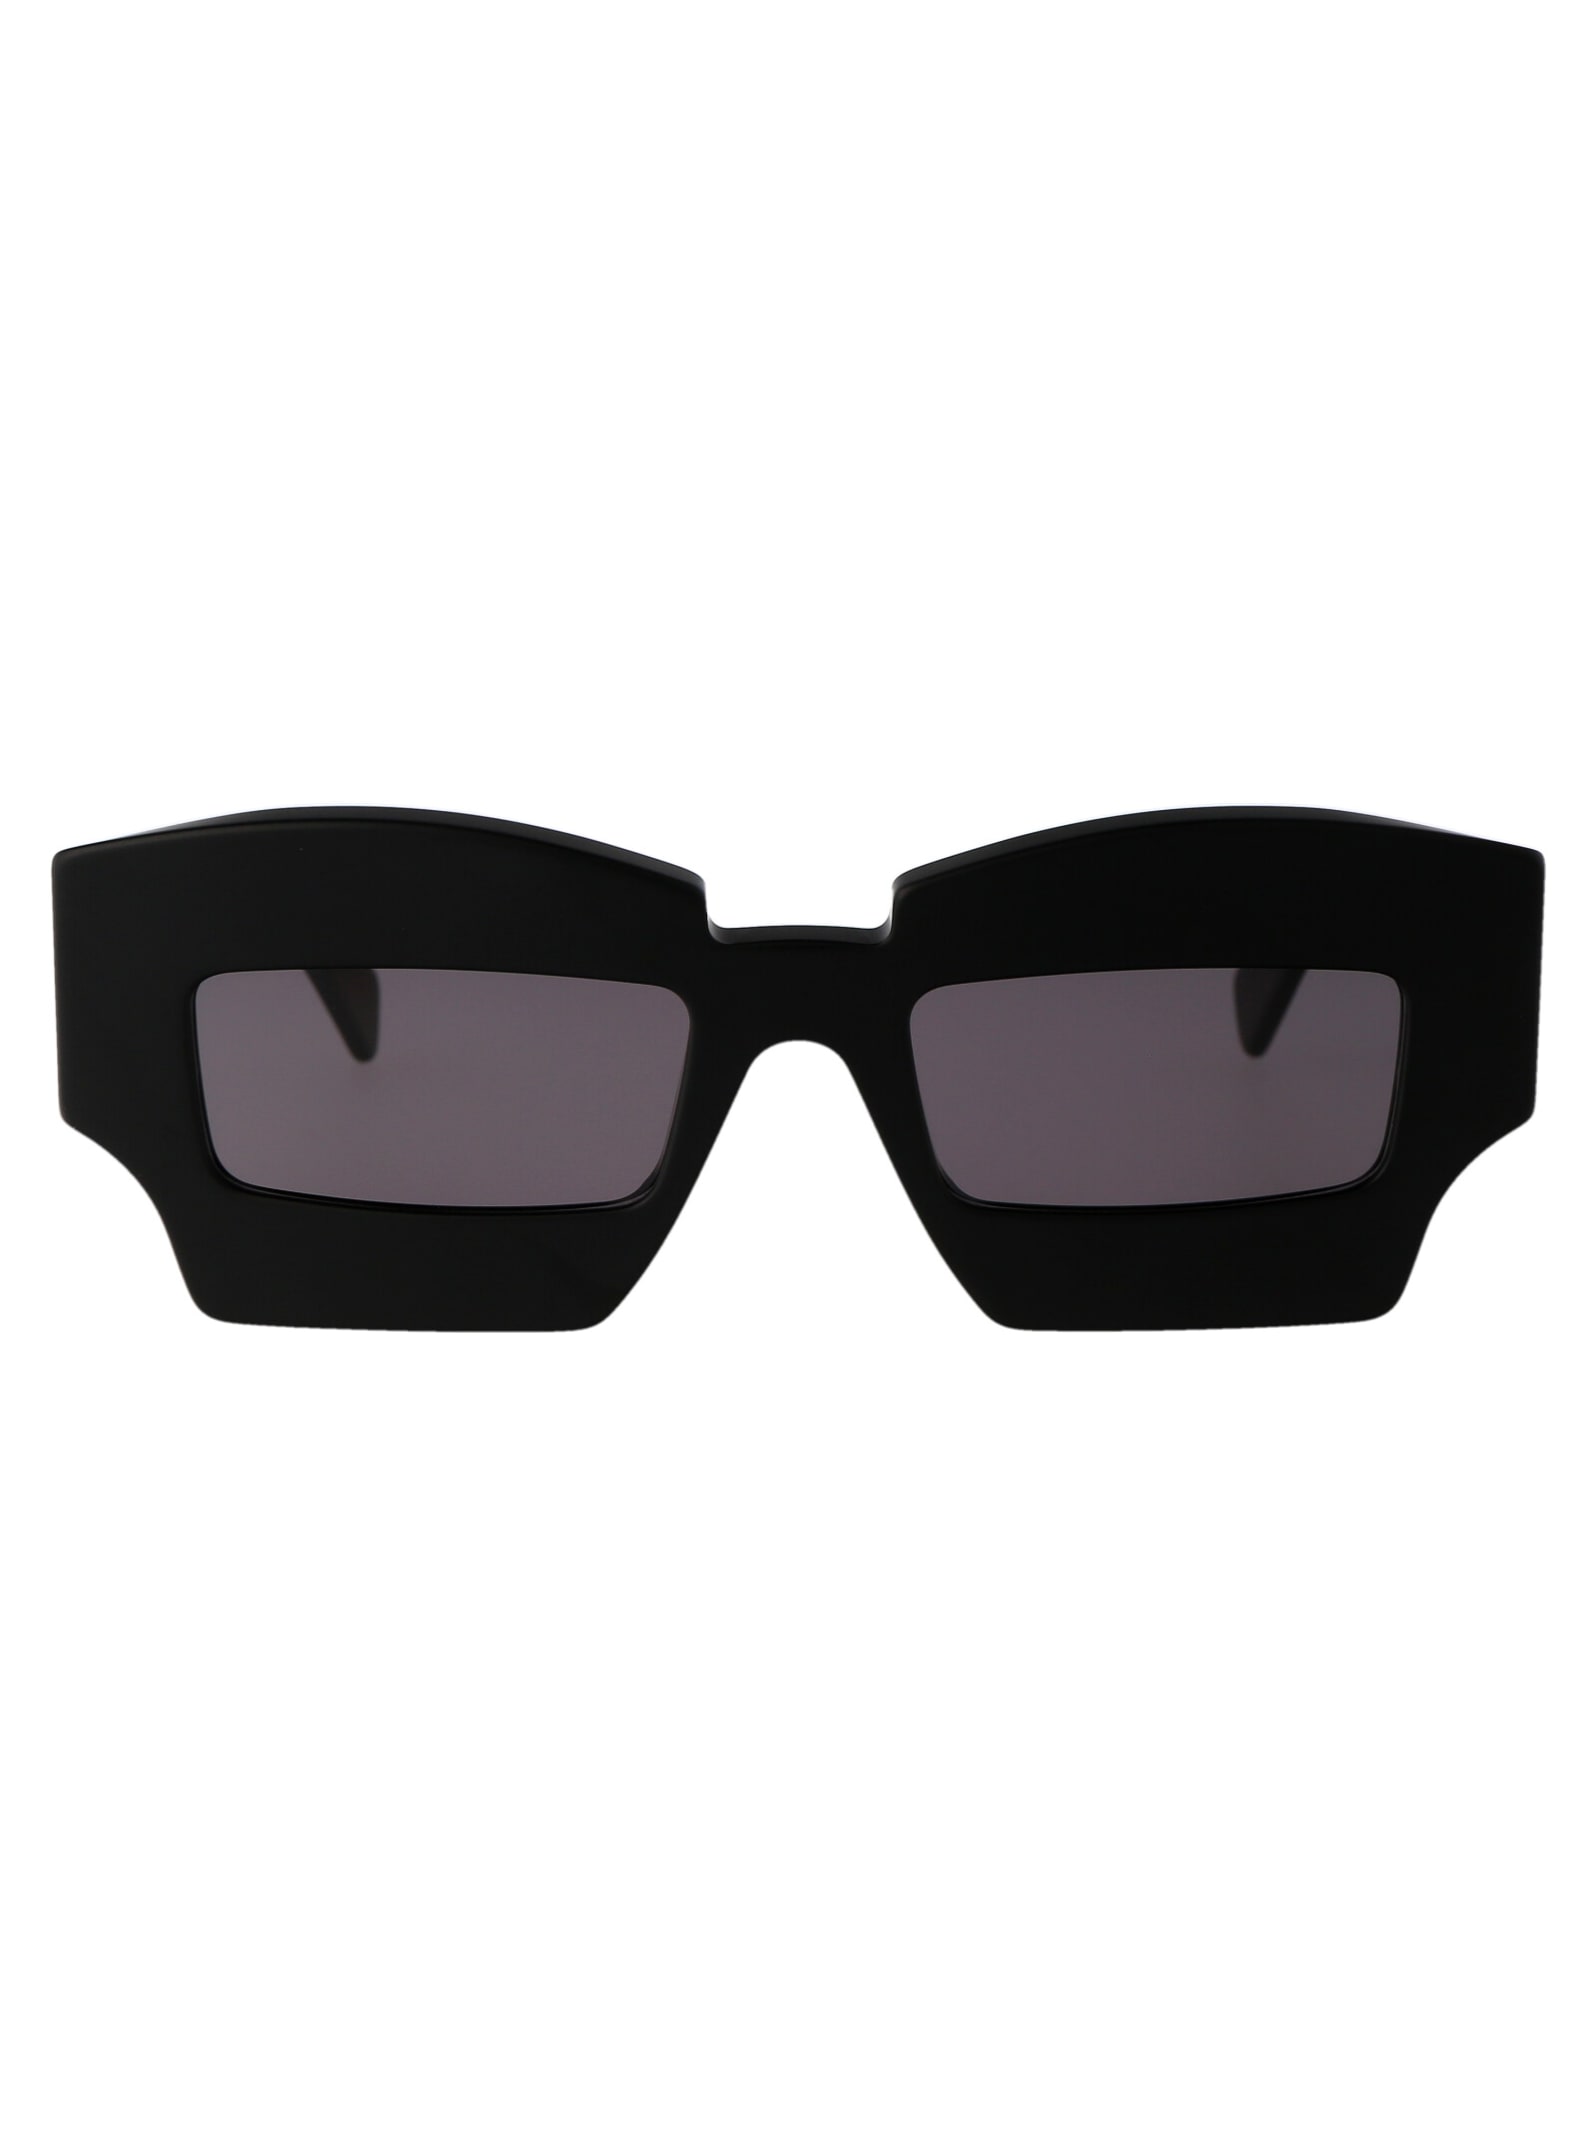 Shop Kuboraum Maske X6 Sunglasses In Bm 2grey